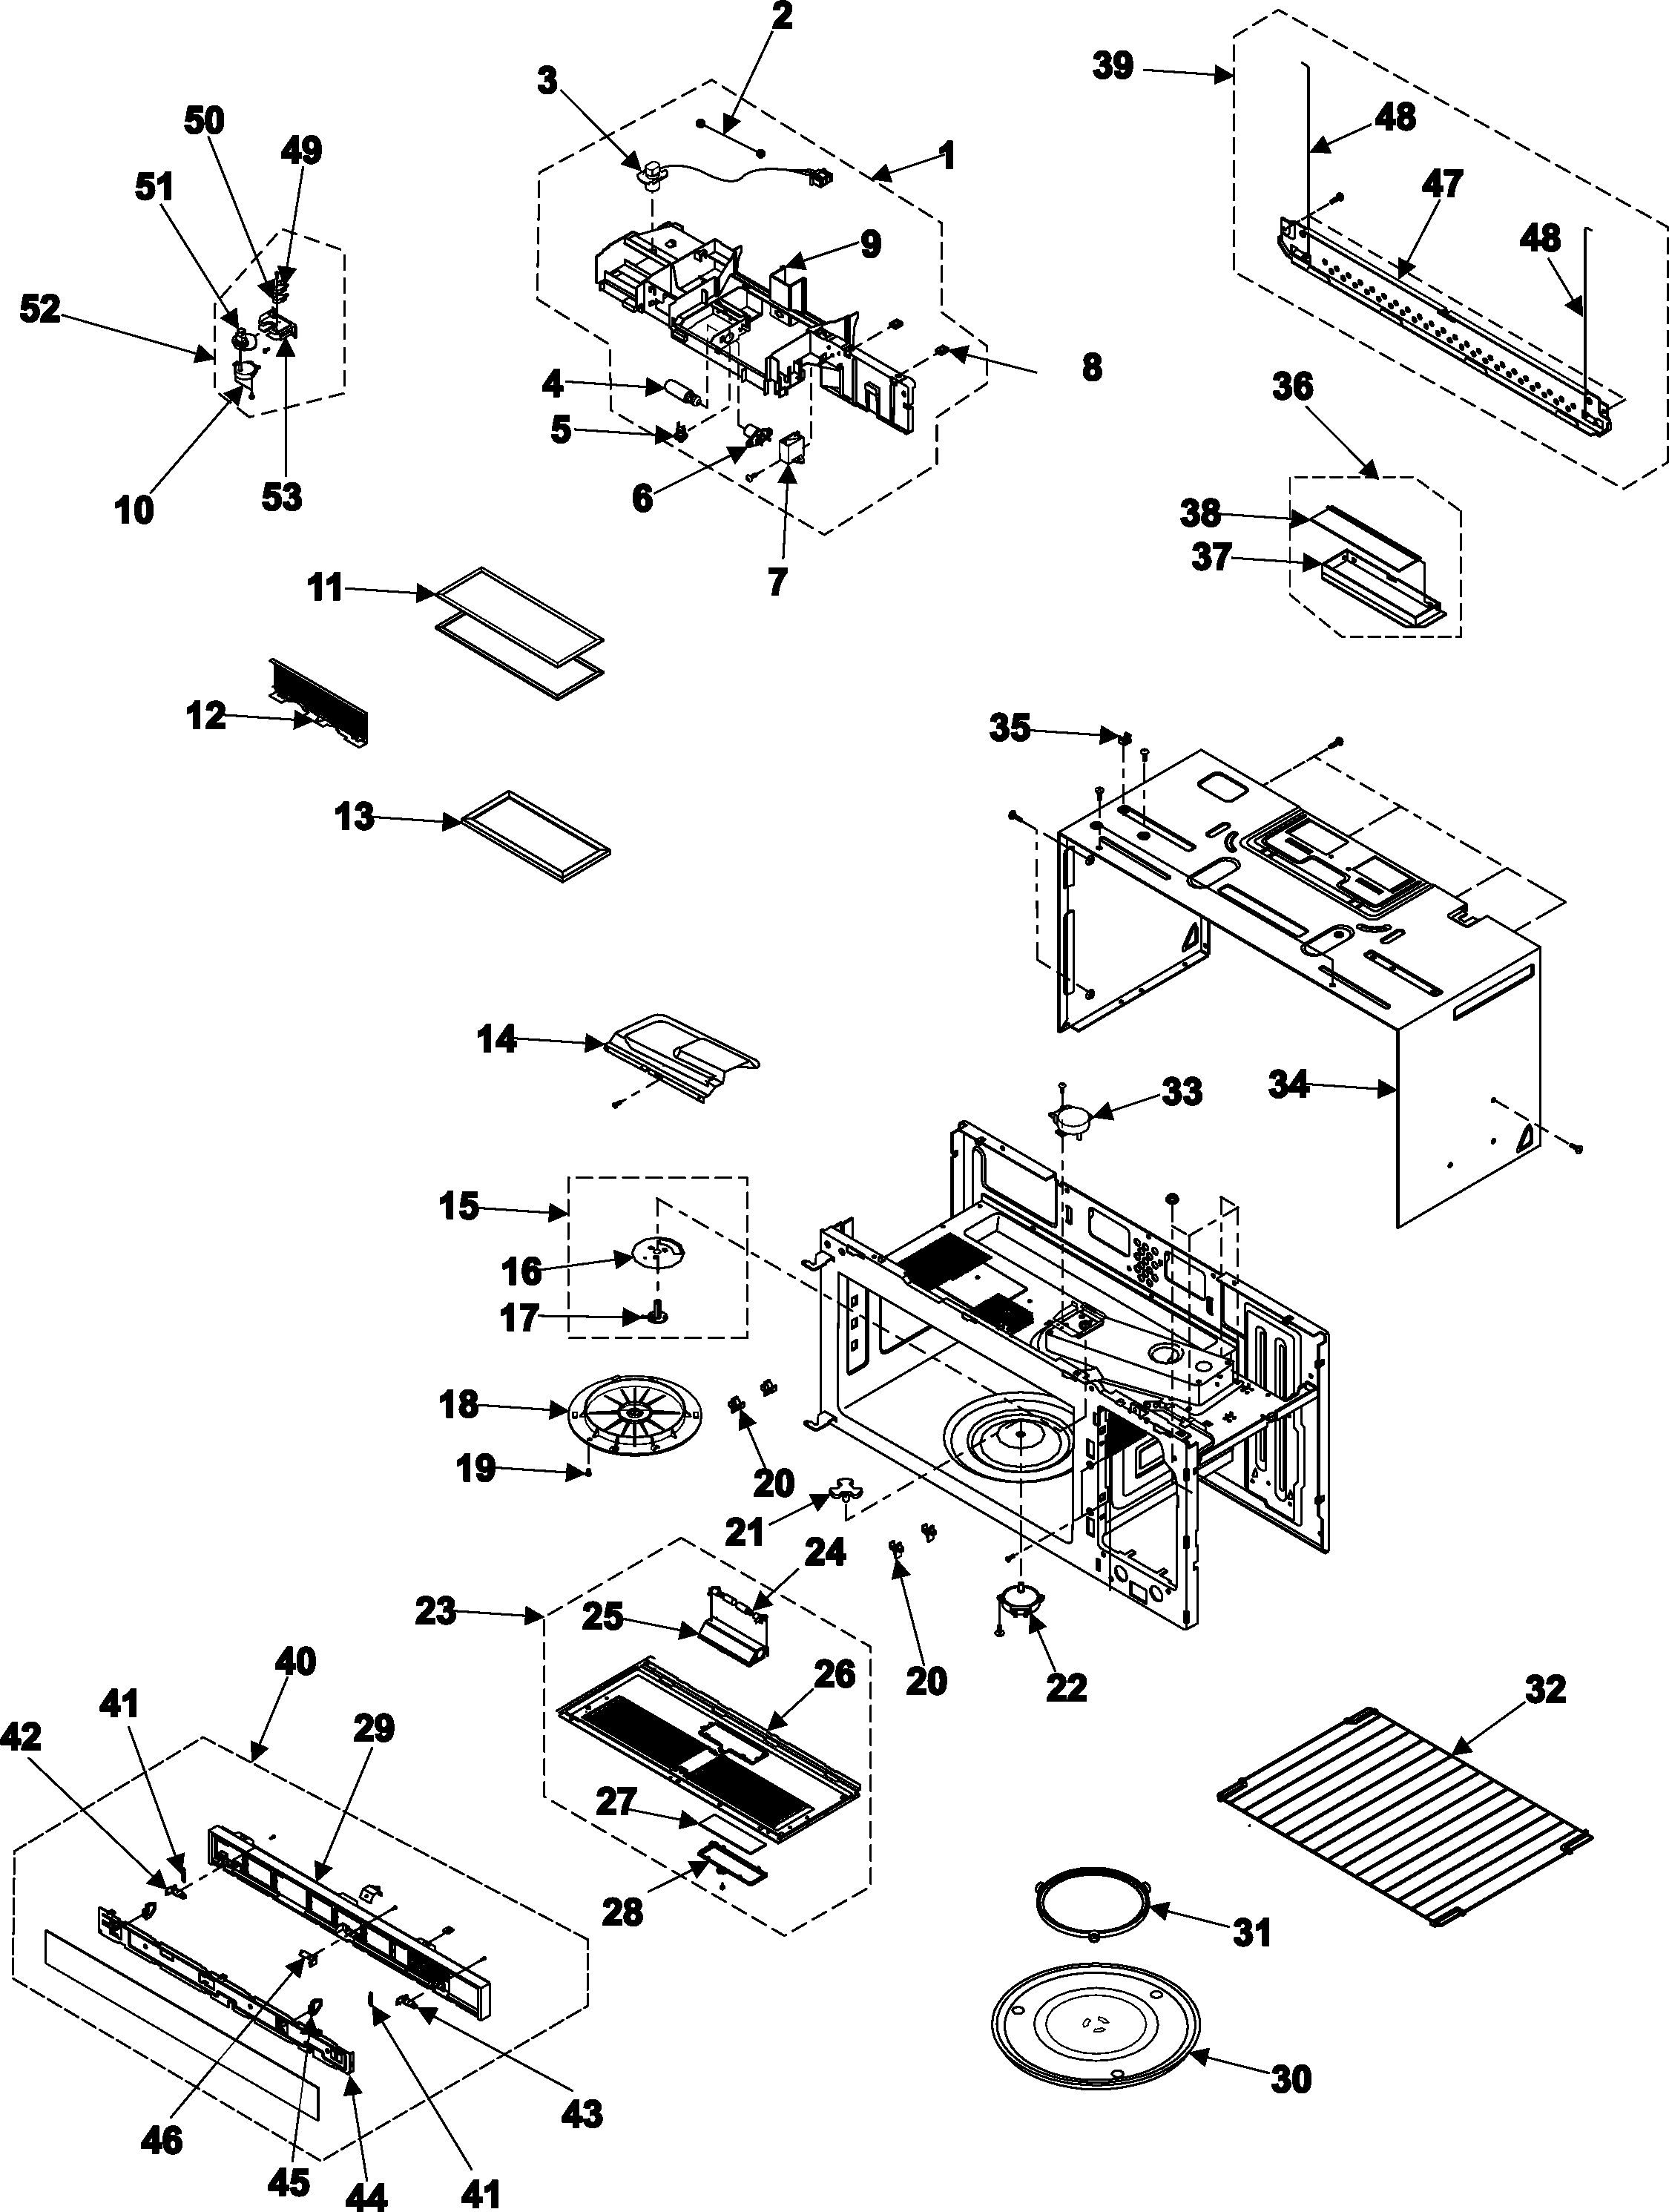 29 Samsung Microwave Parts Diagram - Wire Diagram Source Information